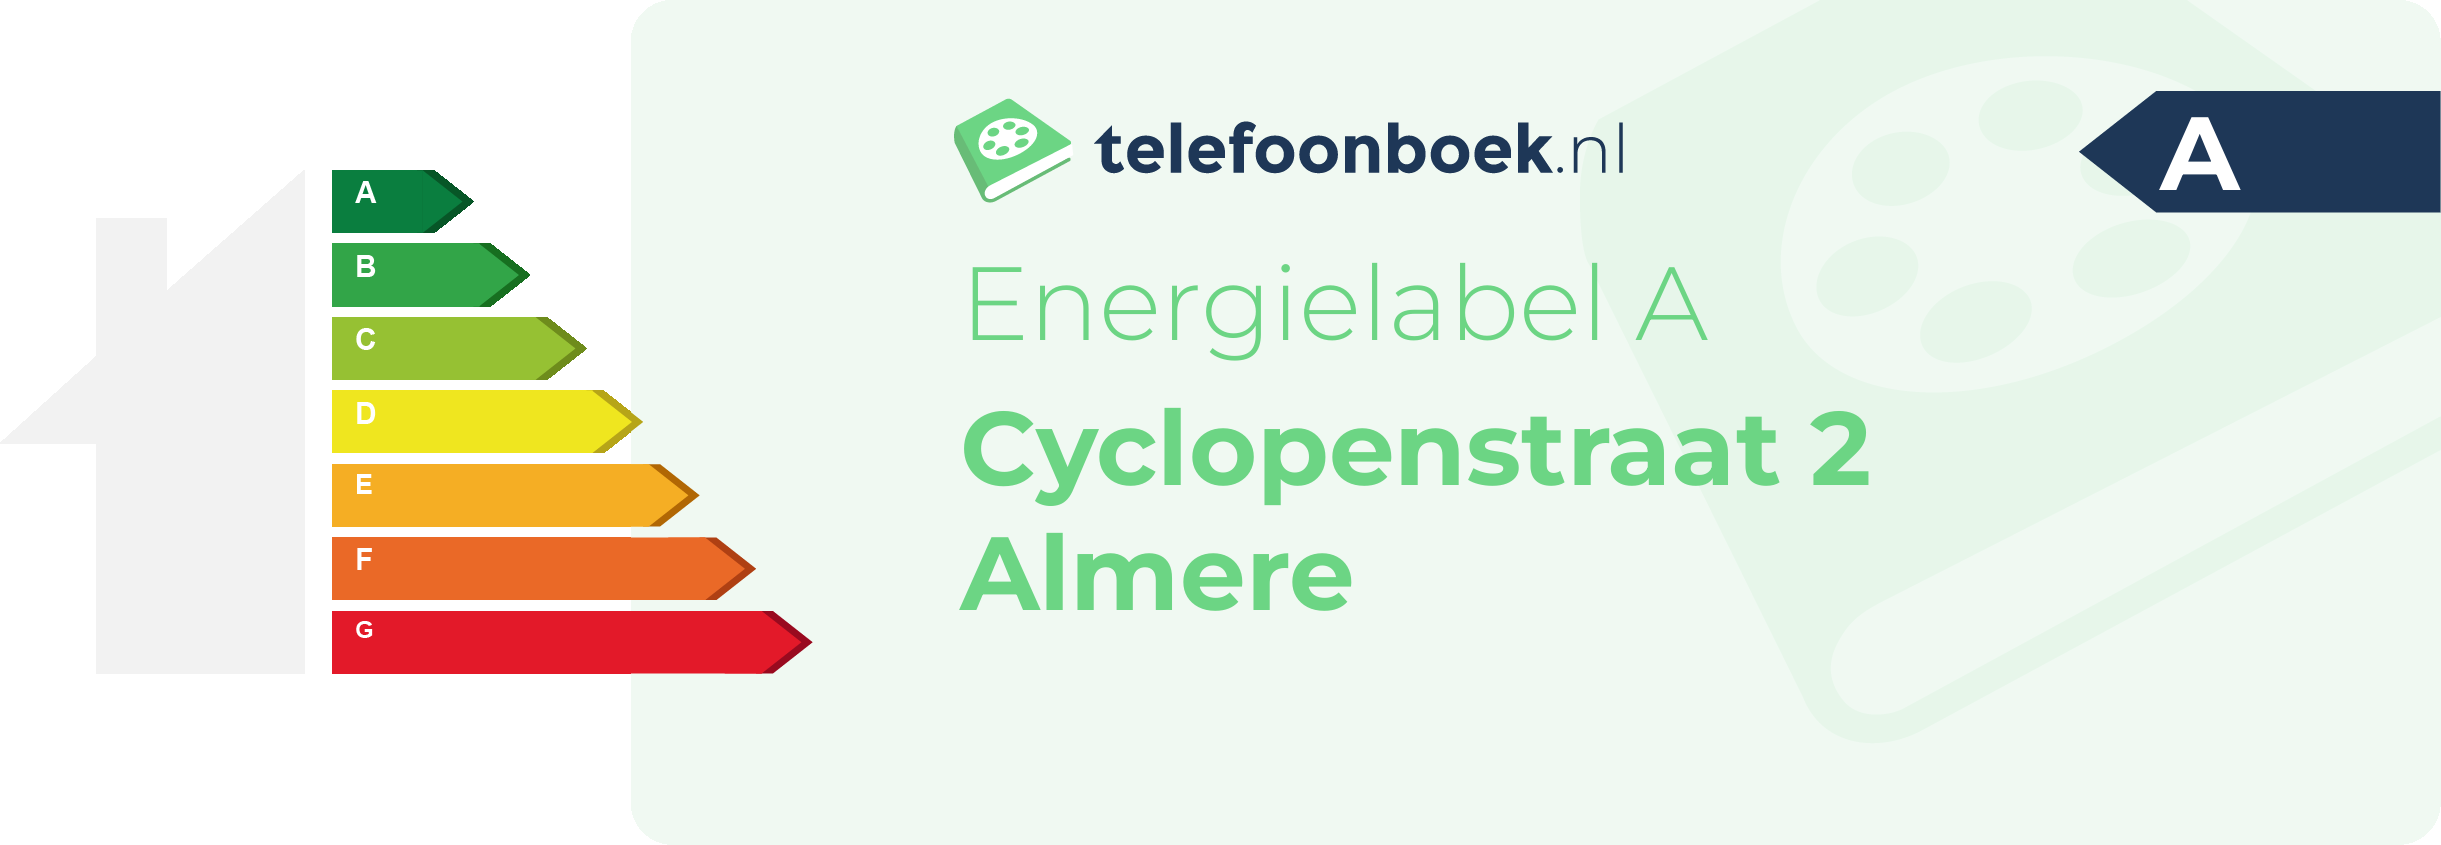 Energielabel Cyclopenstraat 2 Almere